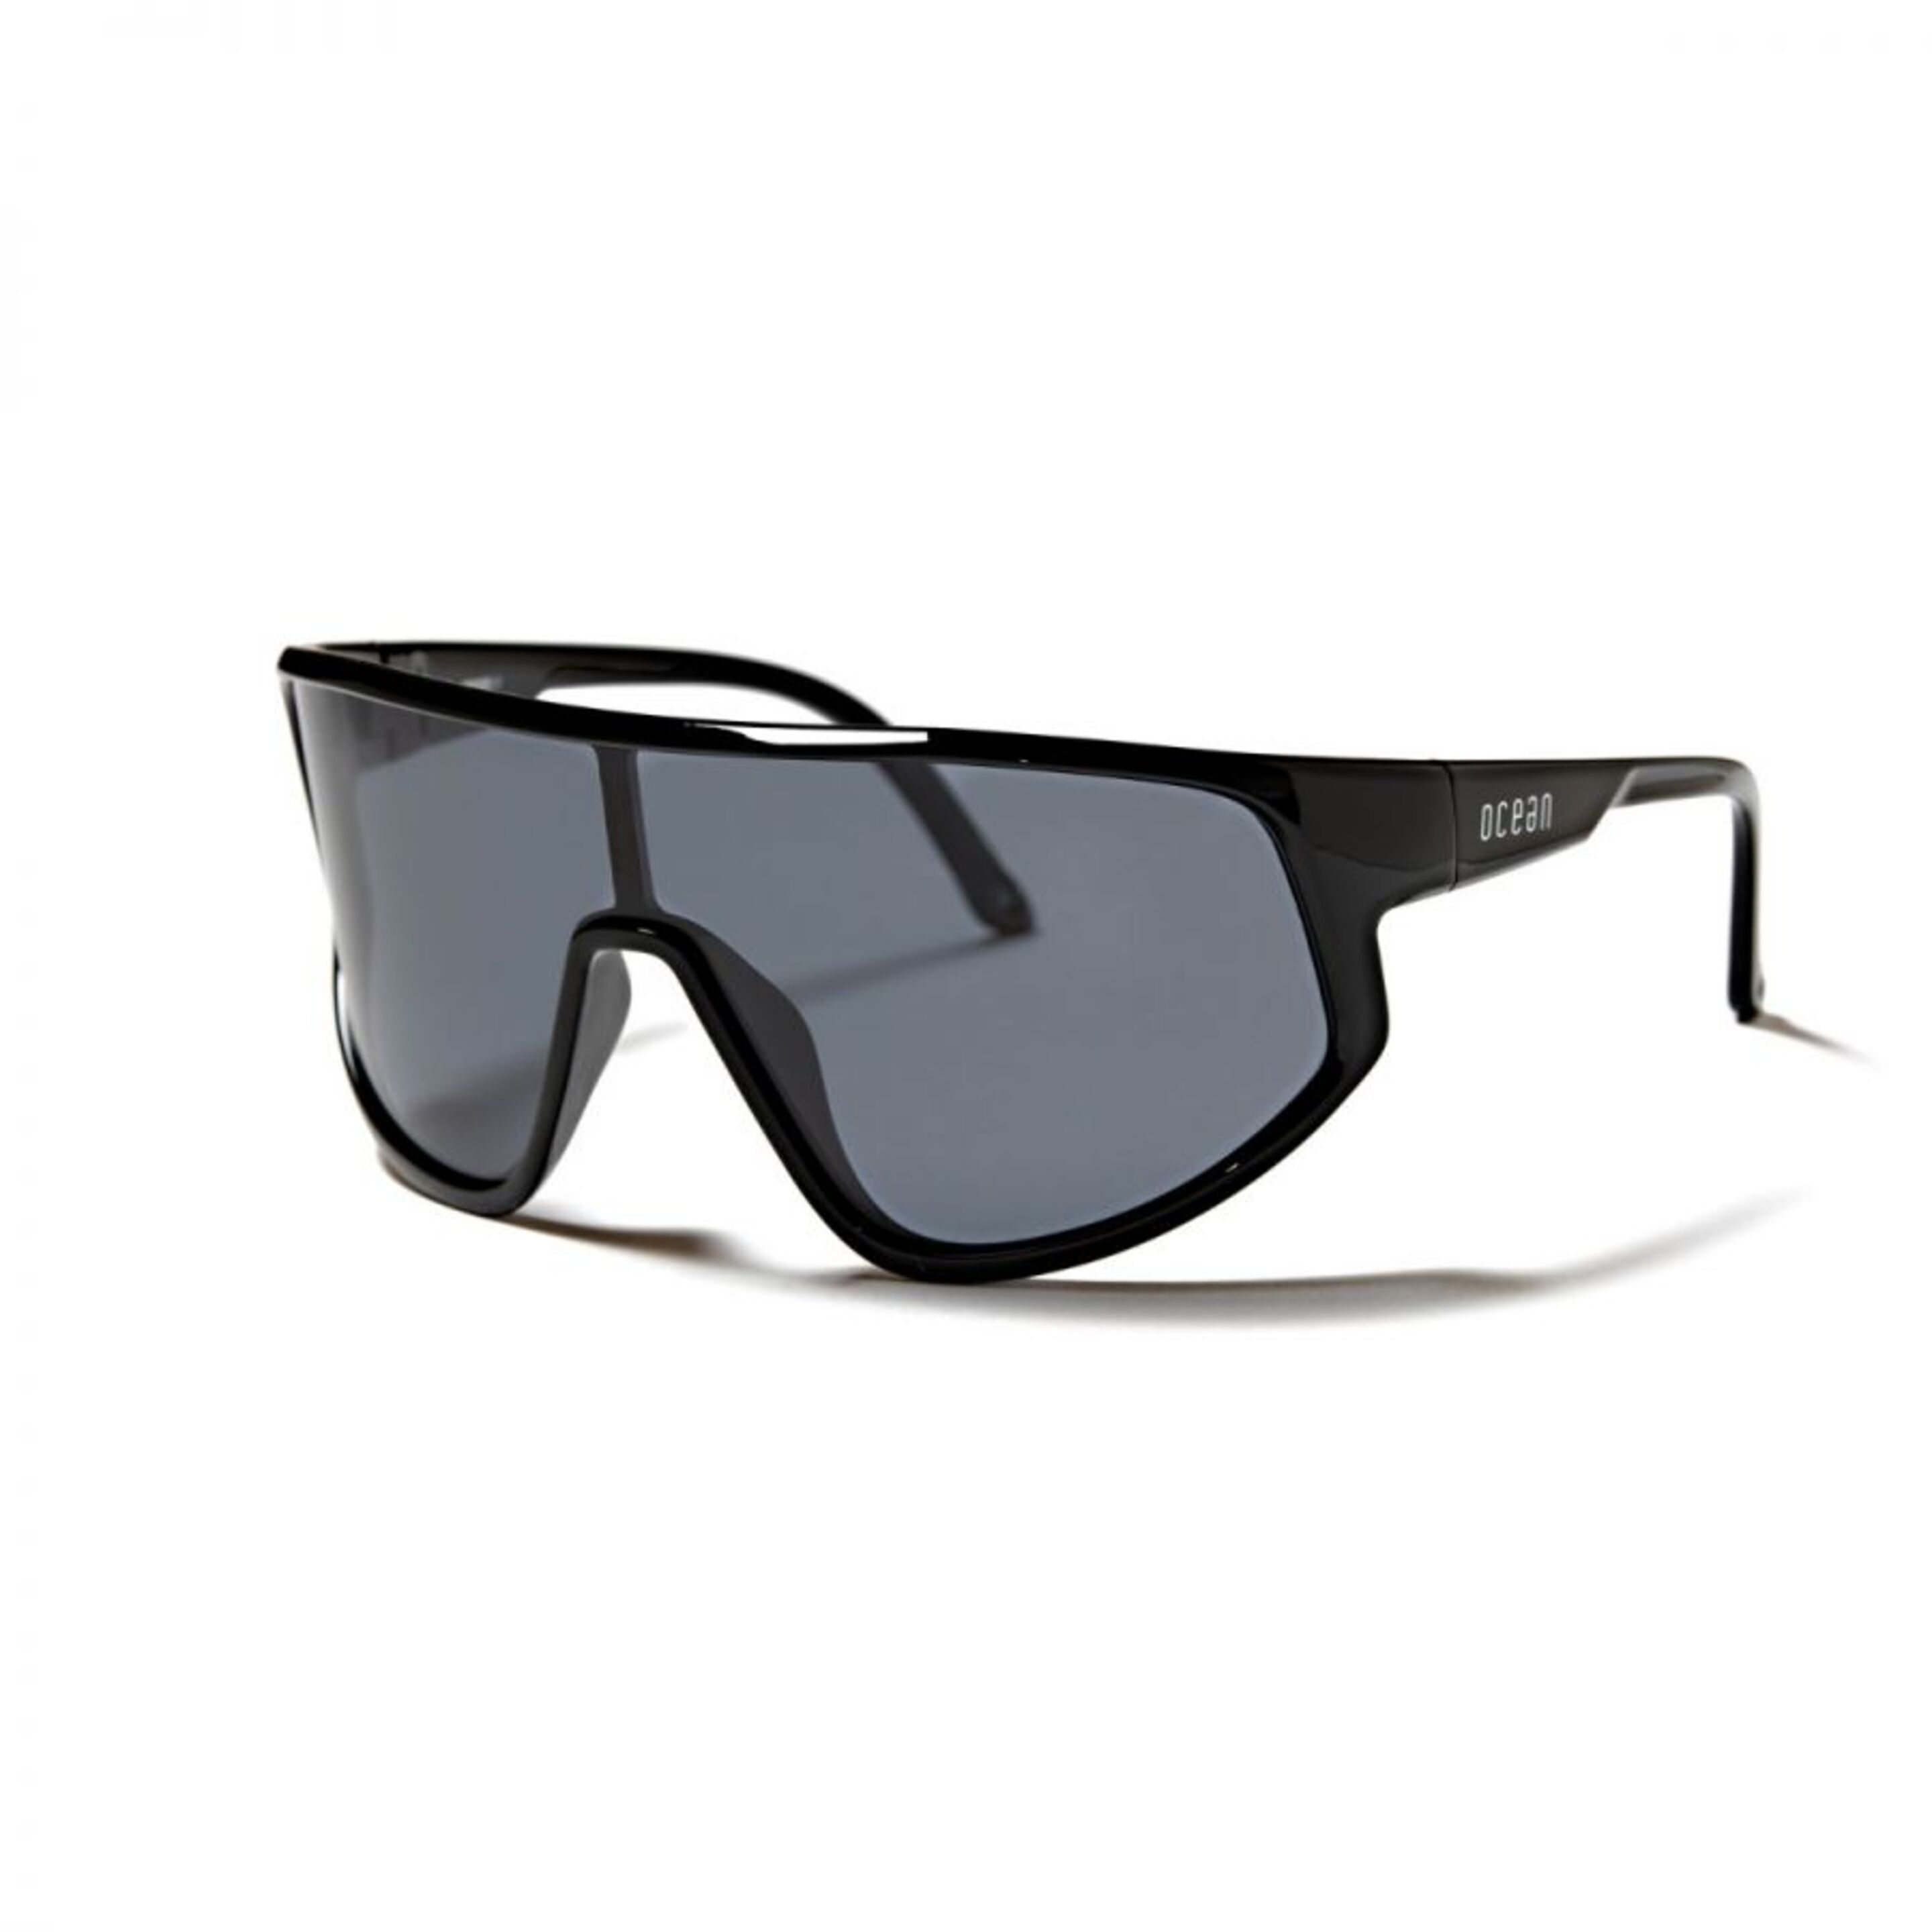 Gafas Deportivas Outdoor Ocean Sunglasses Killy - negro-gris - 